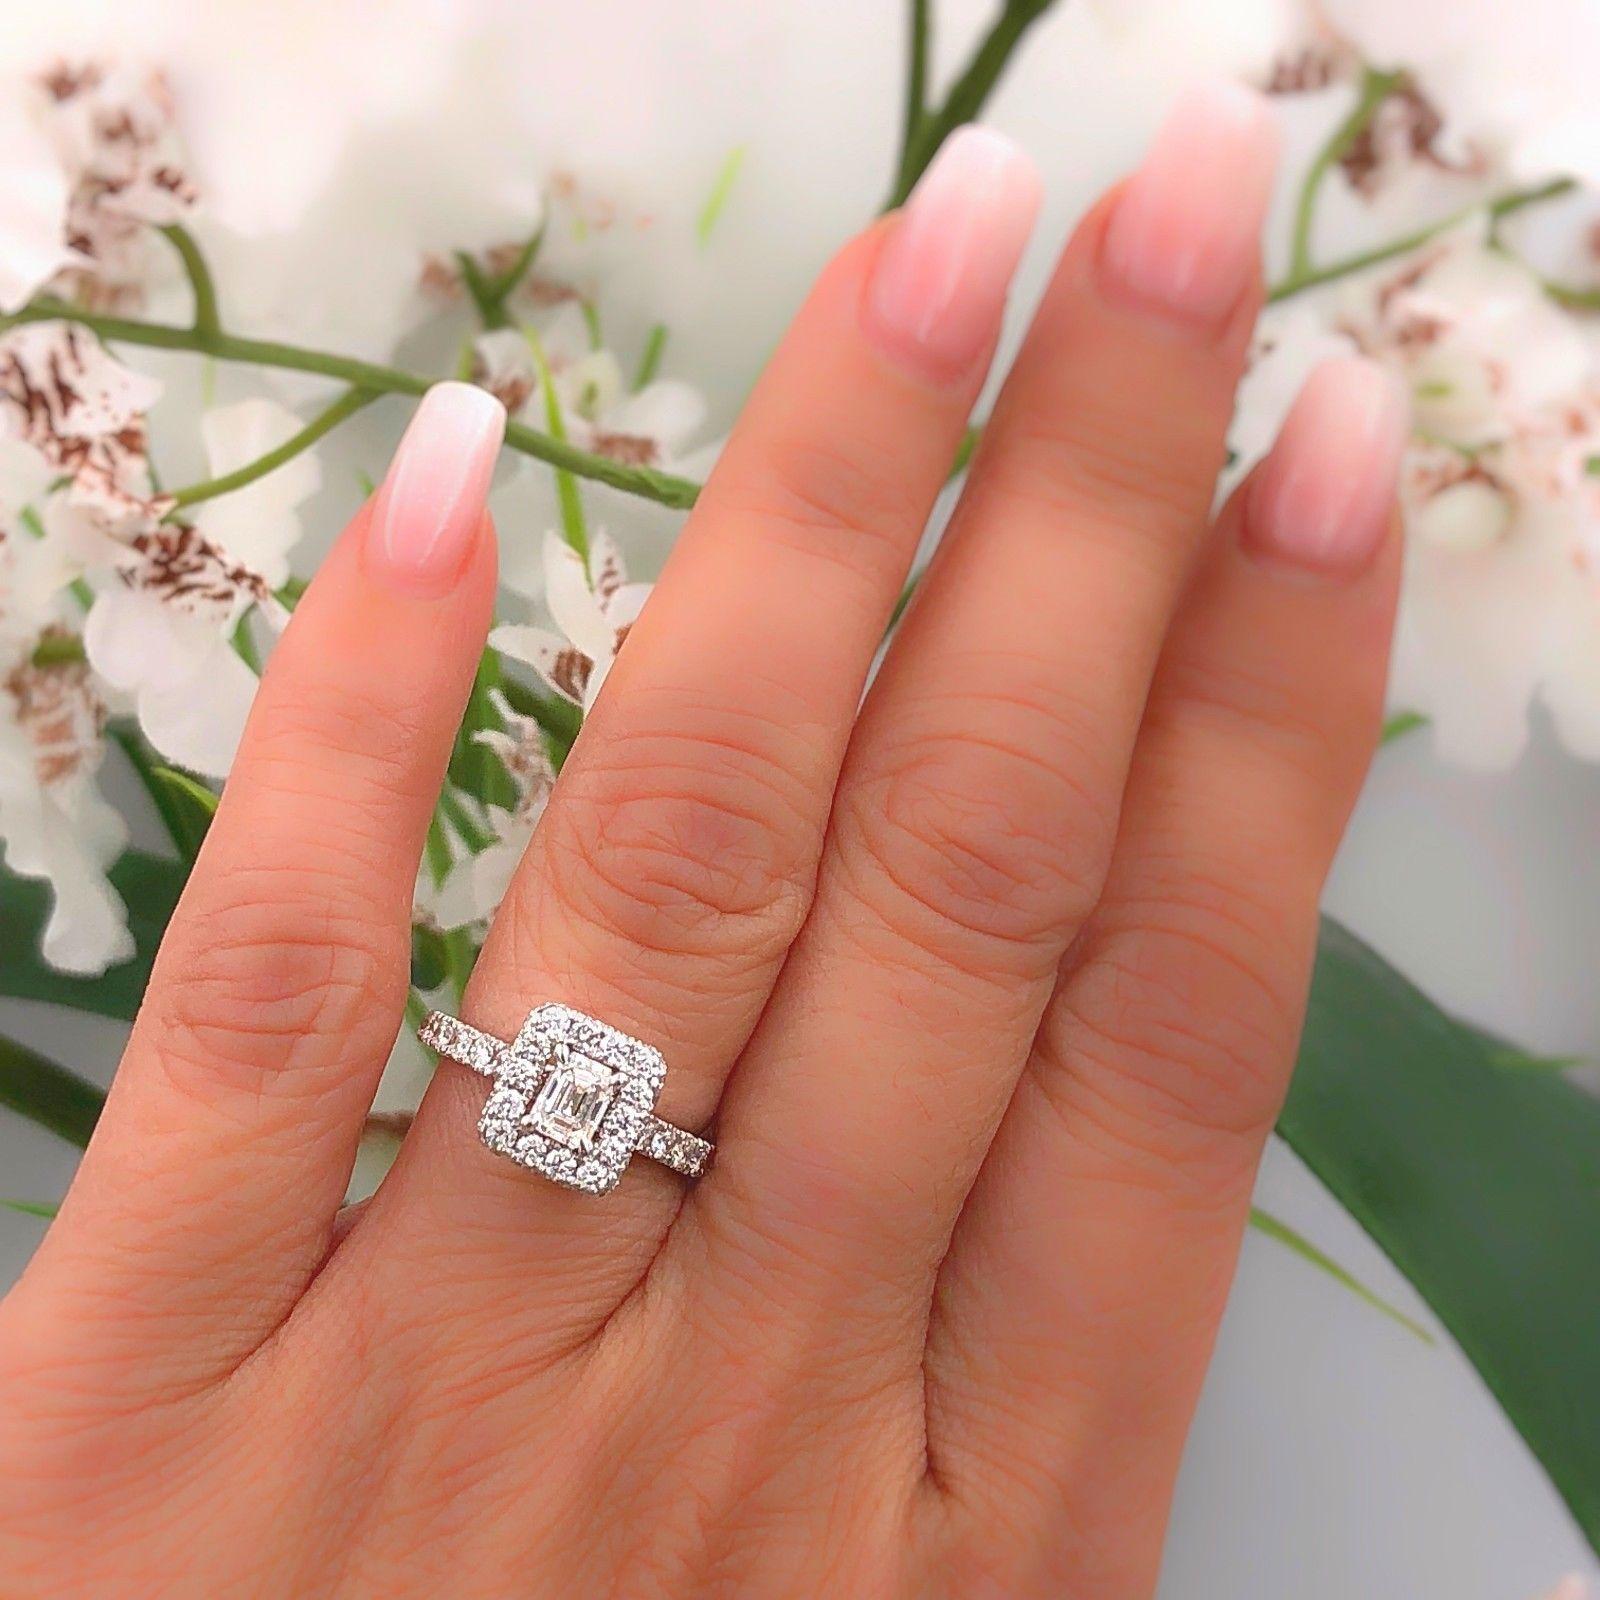 Neil Lane Diamond Engagement Ring Emerald Cut 1.375 Carat in 14 Karat White Gold For Sale 8